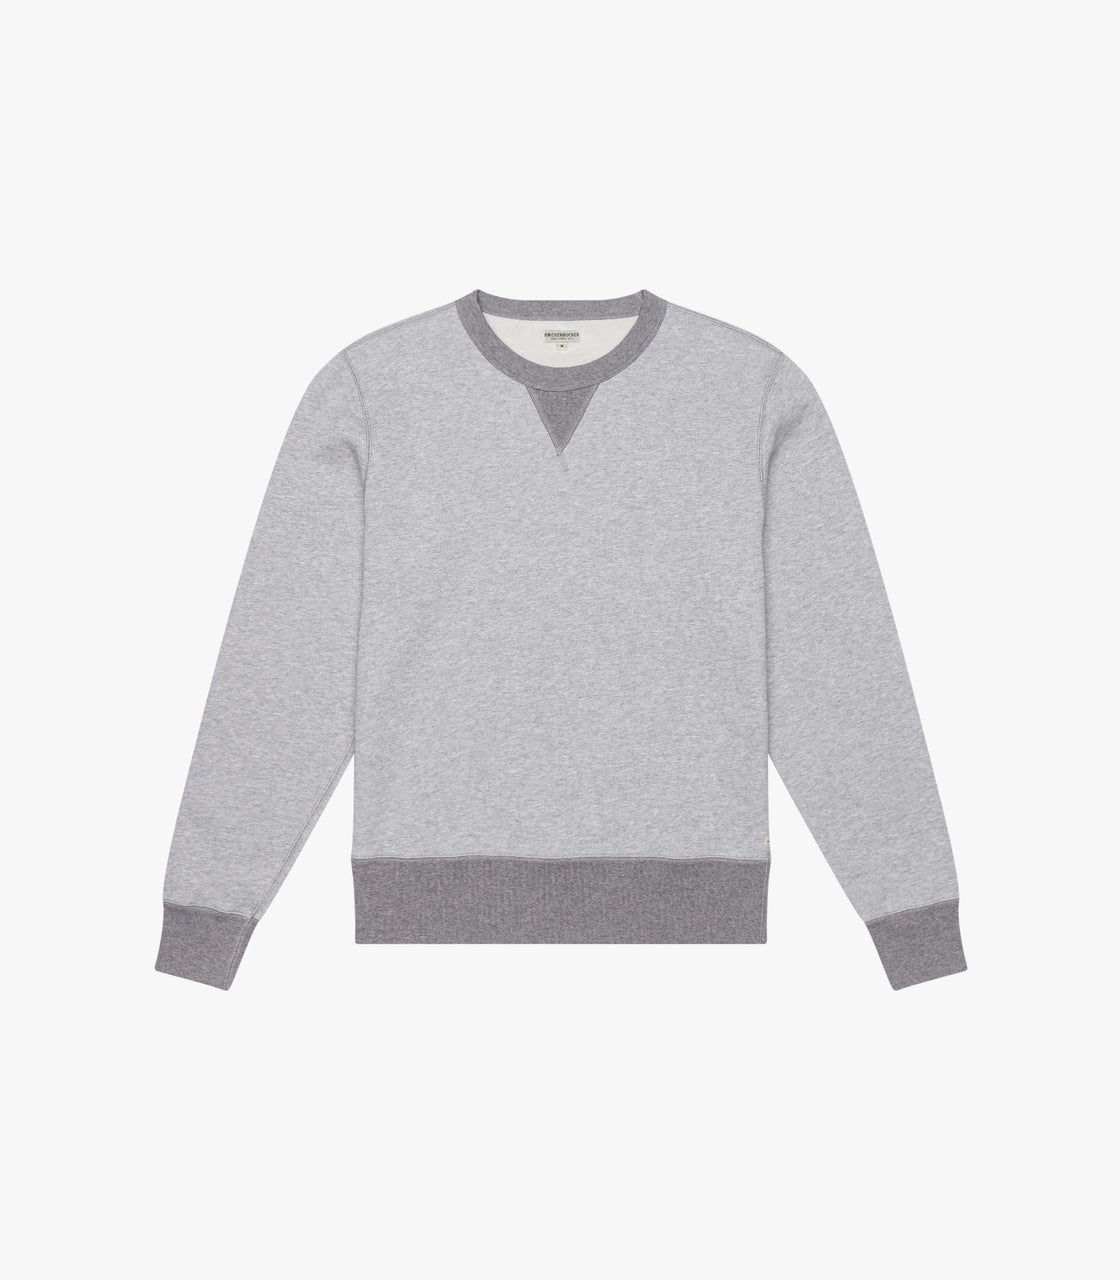 Crew Sweatshirt - Gray